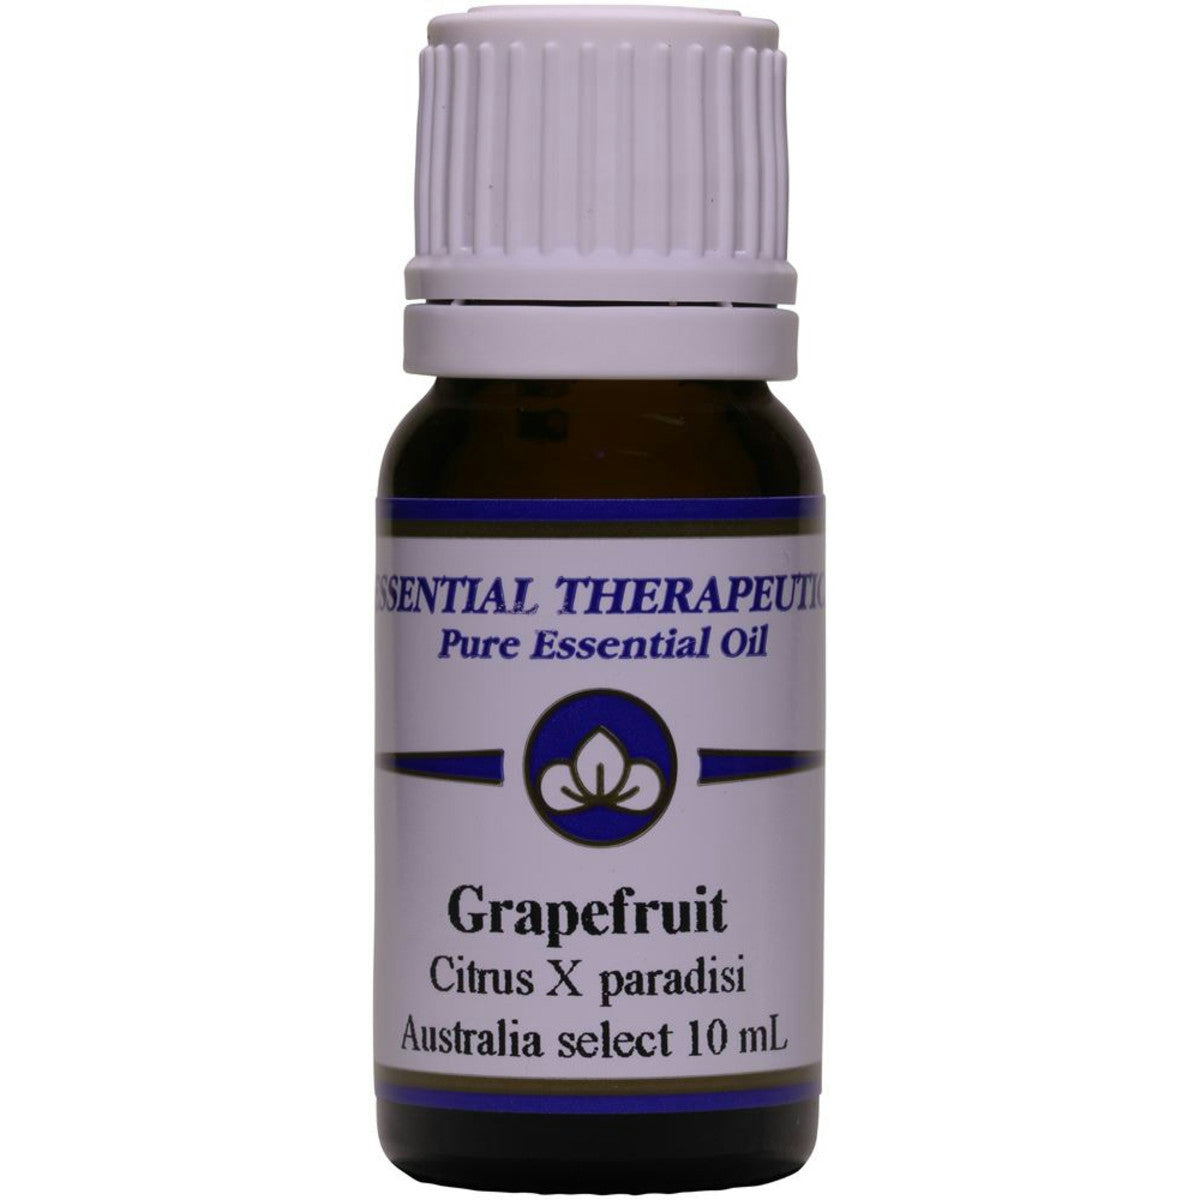 image of Essential Therapeutics Essential Oil Grapefruit 10ml on white background